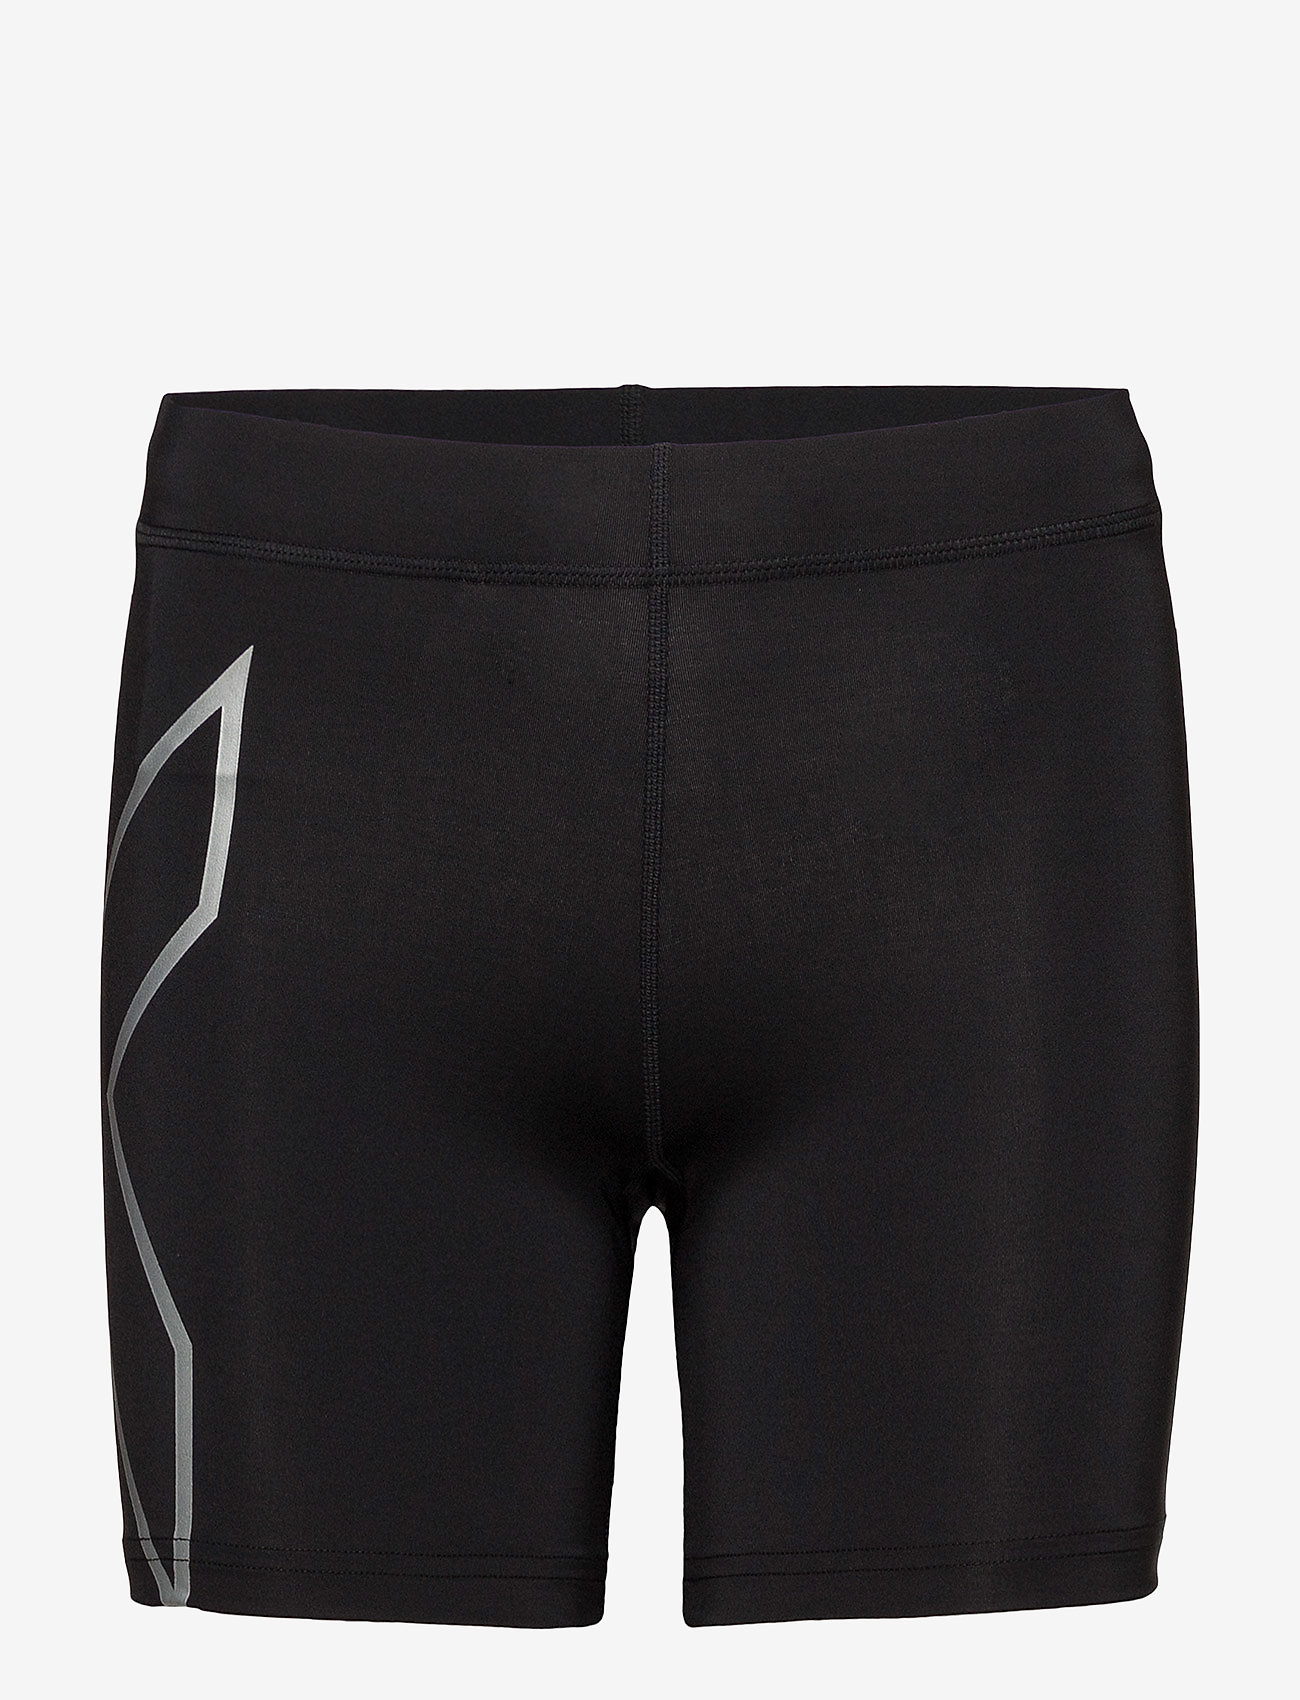 2XU - CORE COMP 5 INCH SHORTS - sports shorts - black/silver - 0